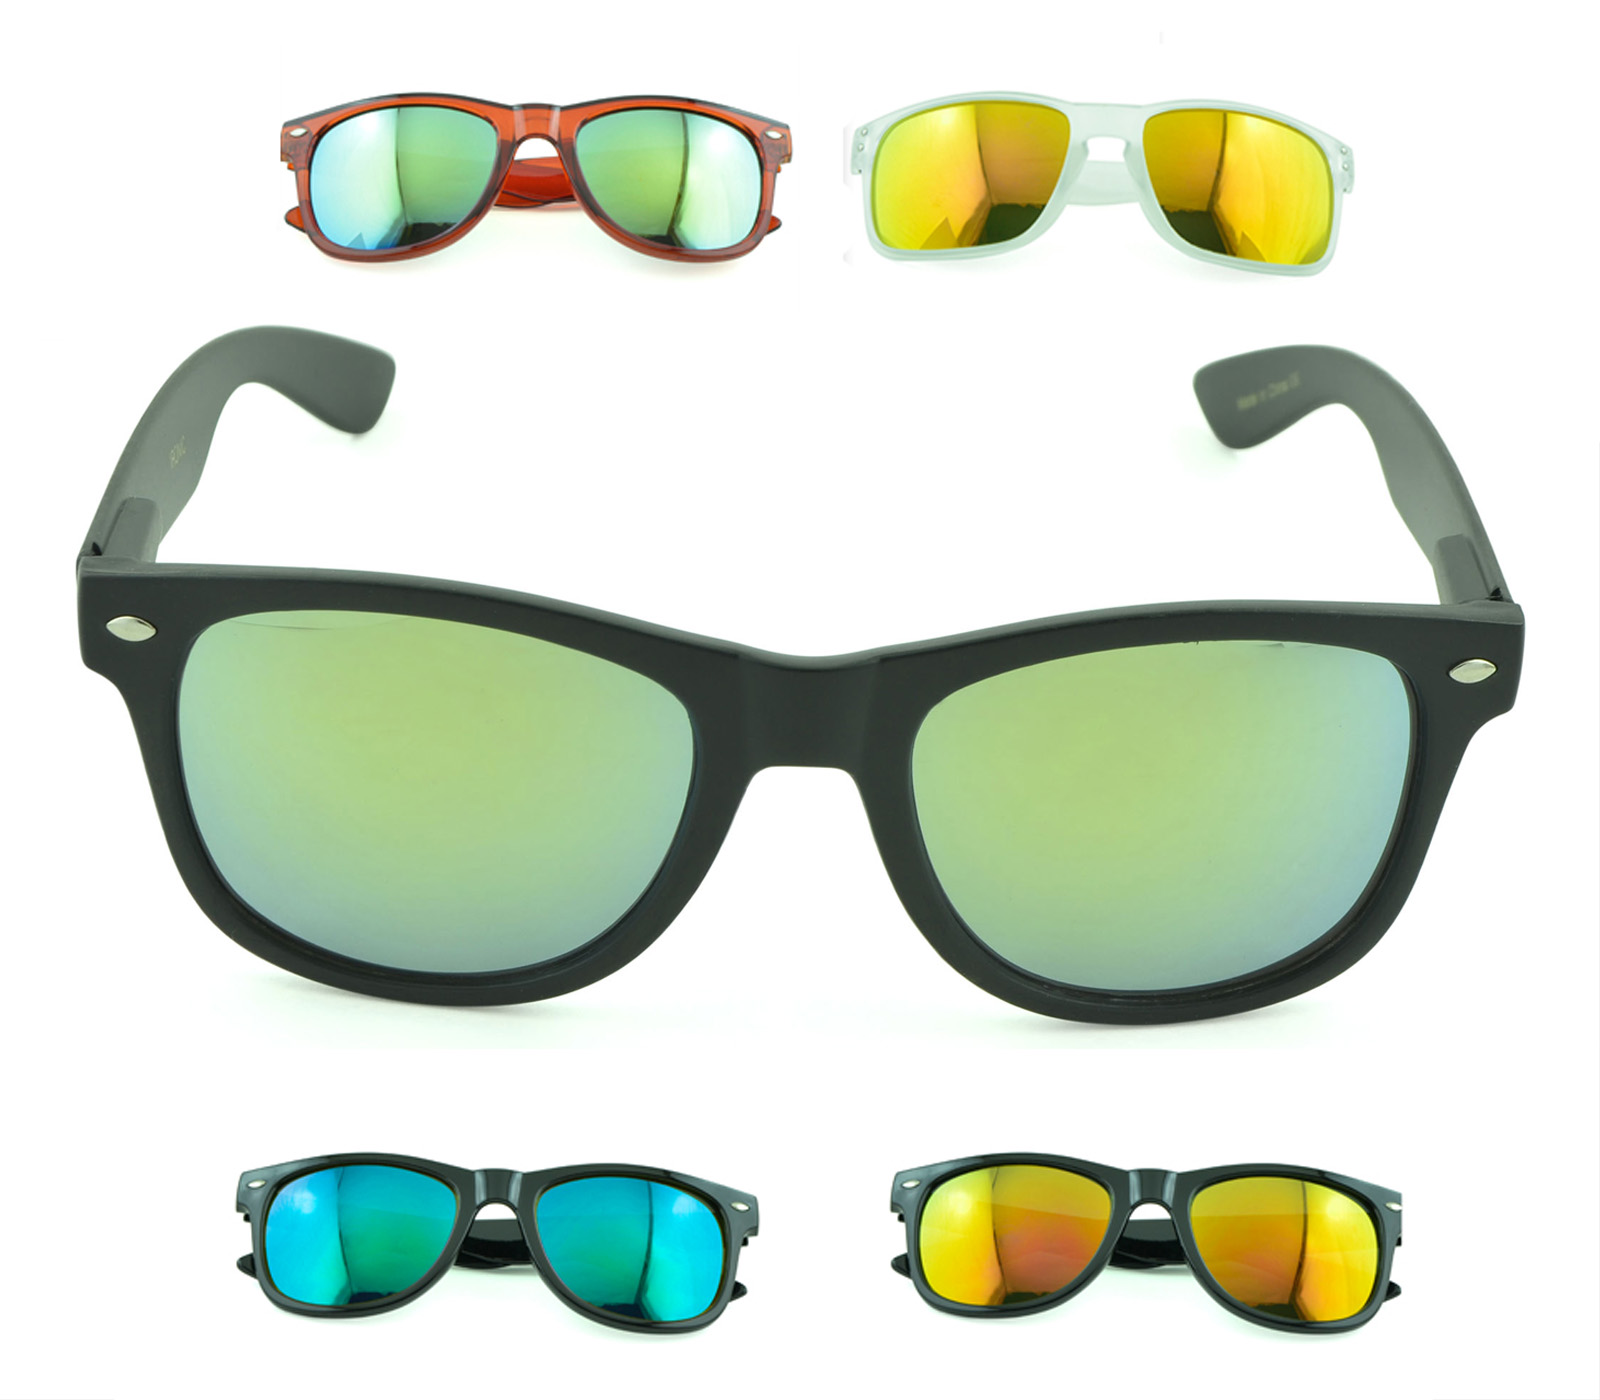 Belle Donne - Women and Men's Trendy Sunglasses - Assorted Colors